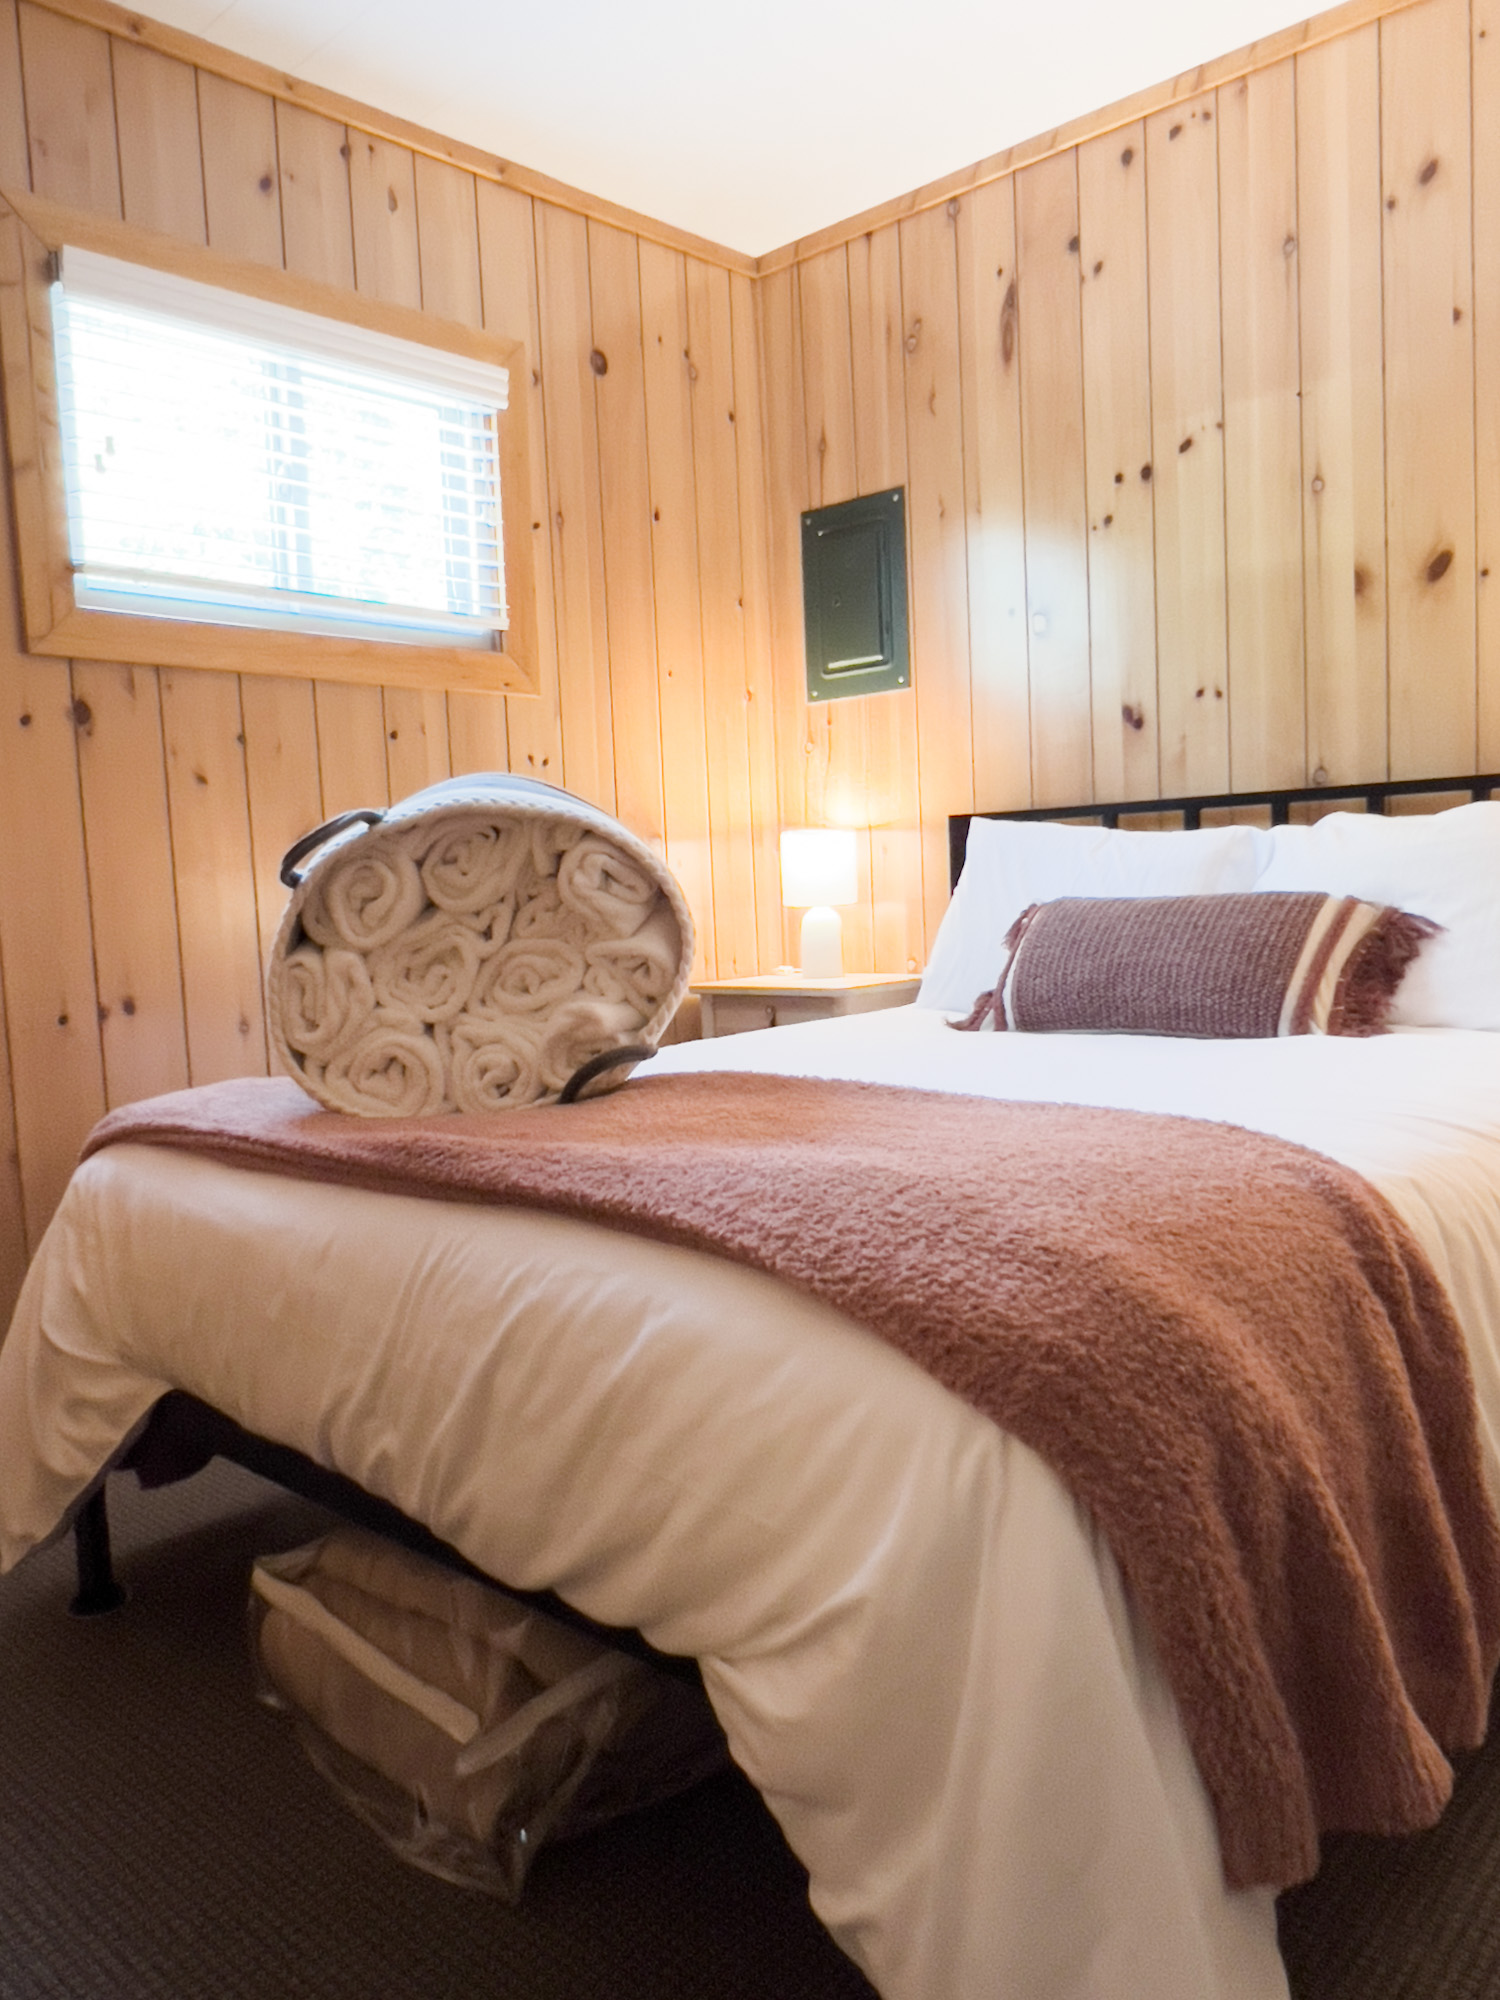 Cabin 4 Queen Bed - at the Sleeping Bear Resort